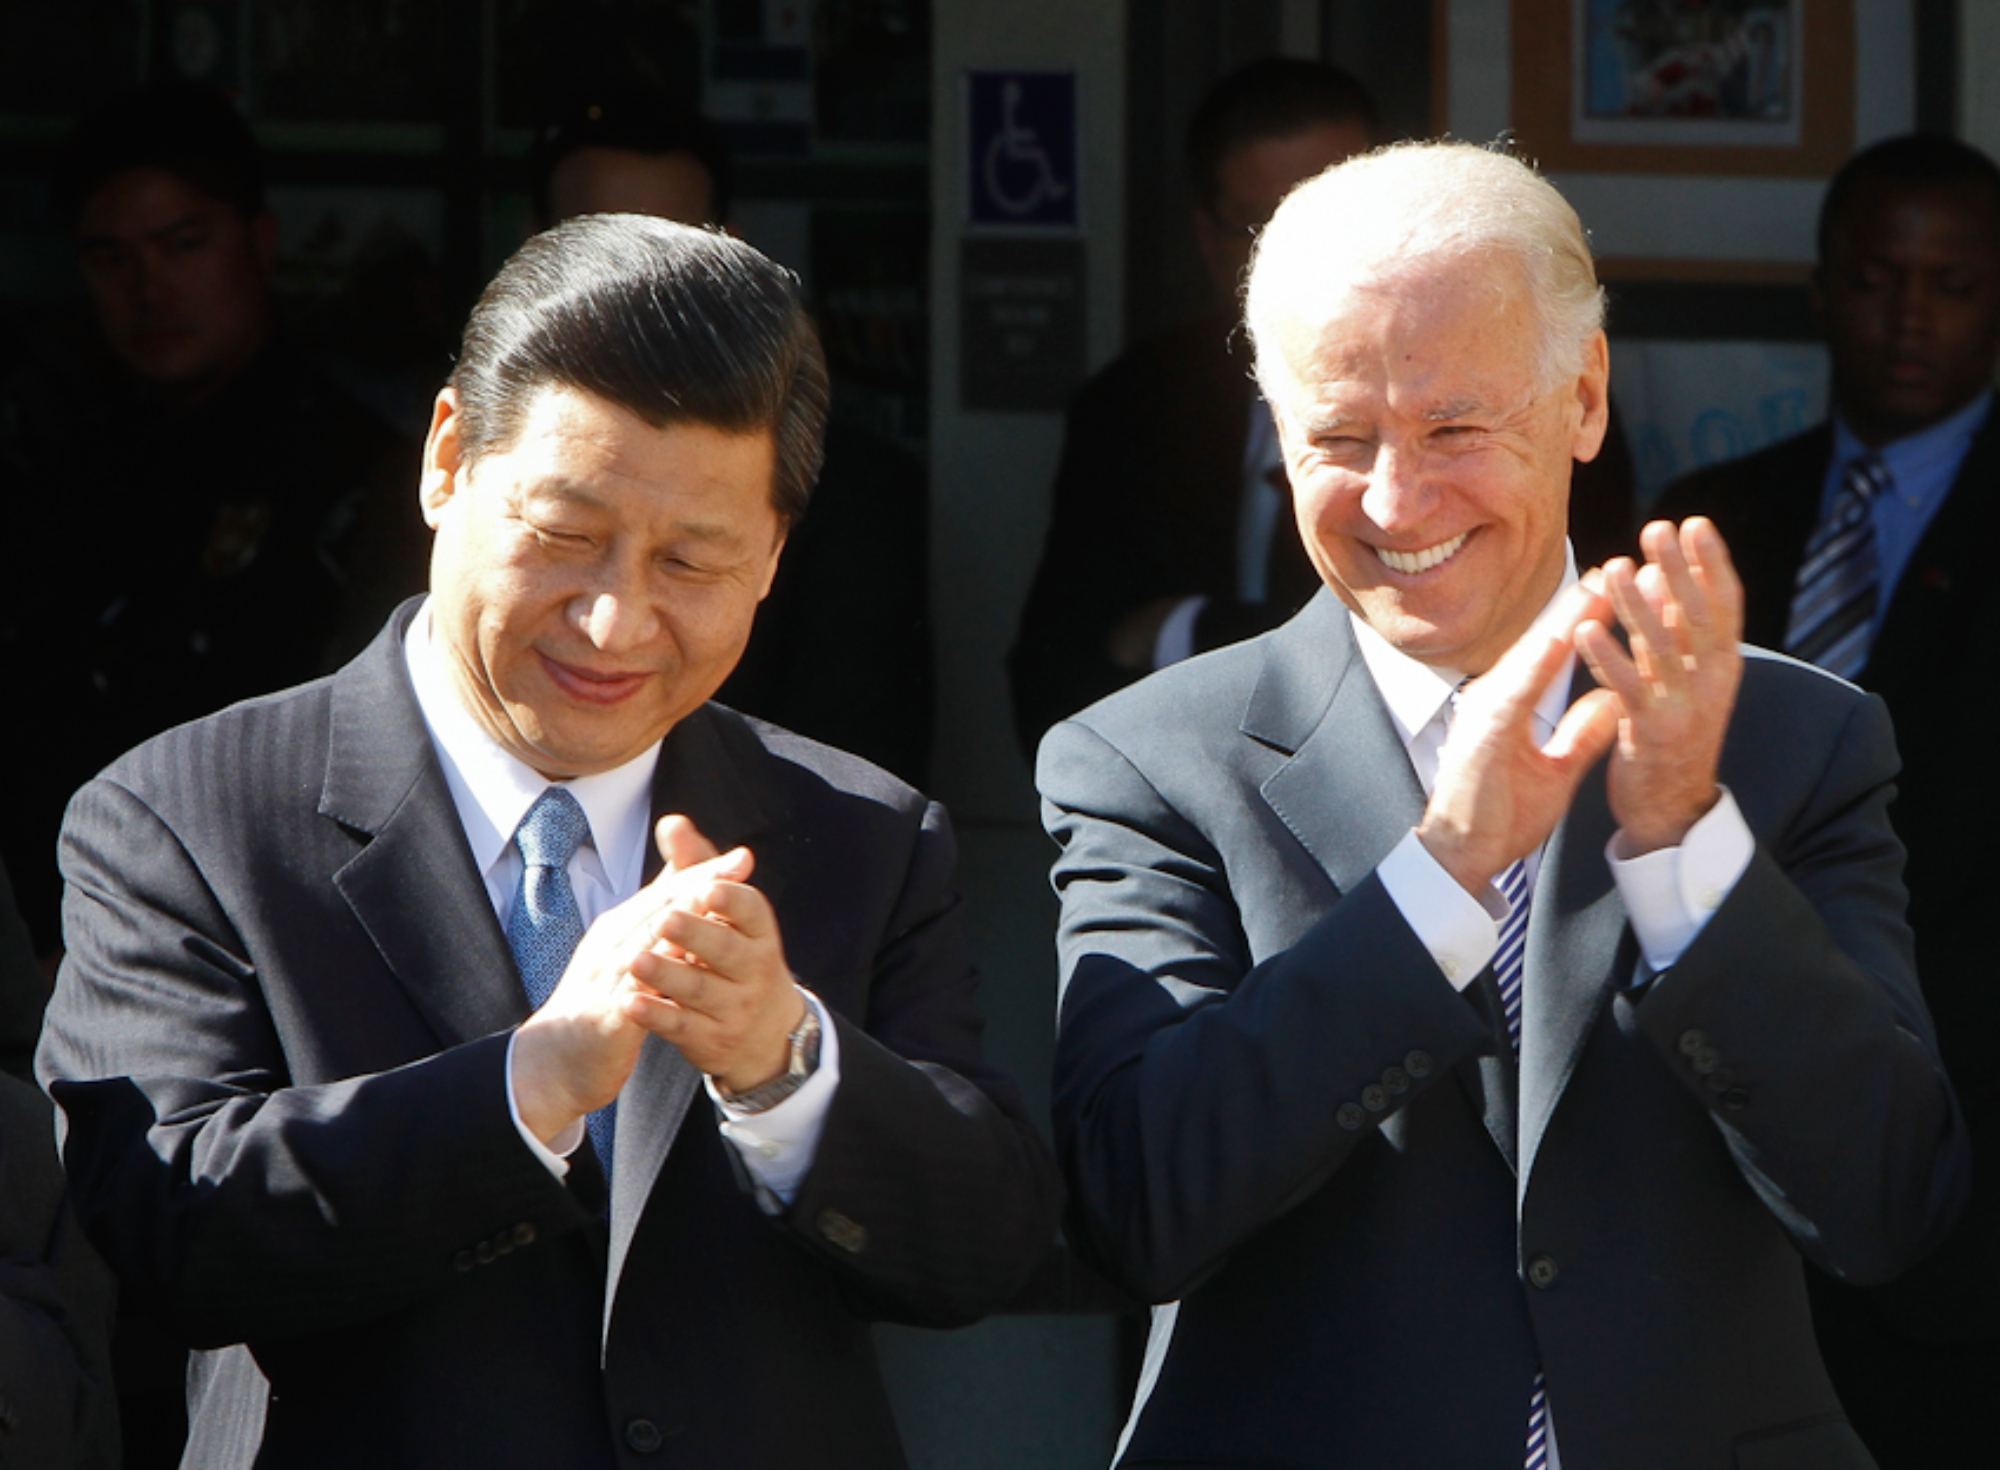 Then-U.S. Vice President Biden and then-Chinese Vice President Xi, Los Angeles, February 14, 2012. Source: Photos: David Starkopf / Office of Mayor Antonio R. Villaraigosa, flickr.com.